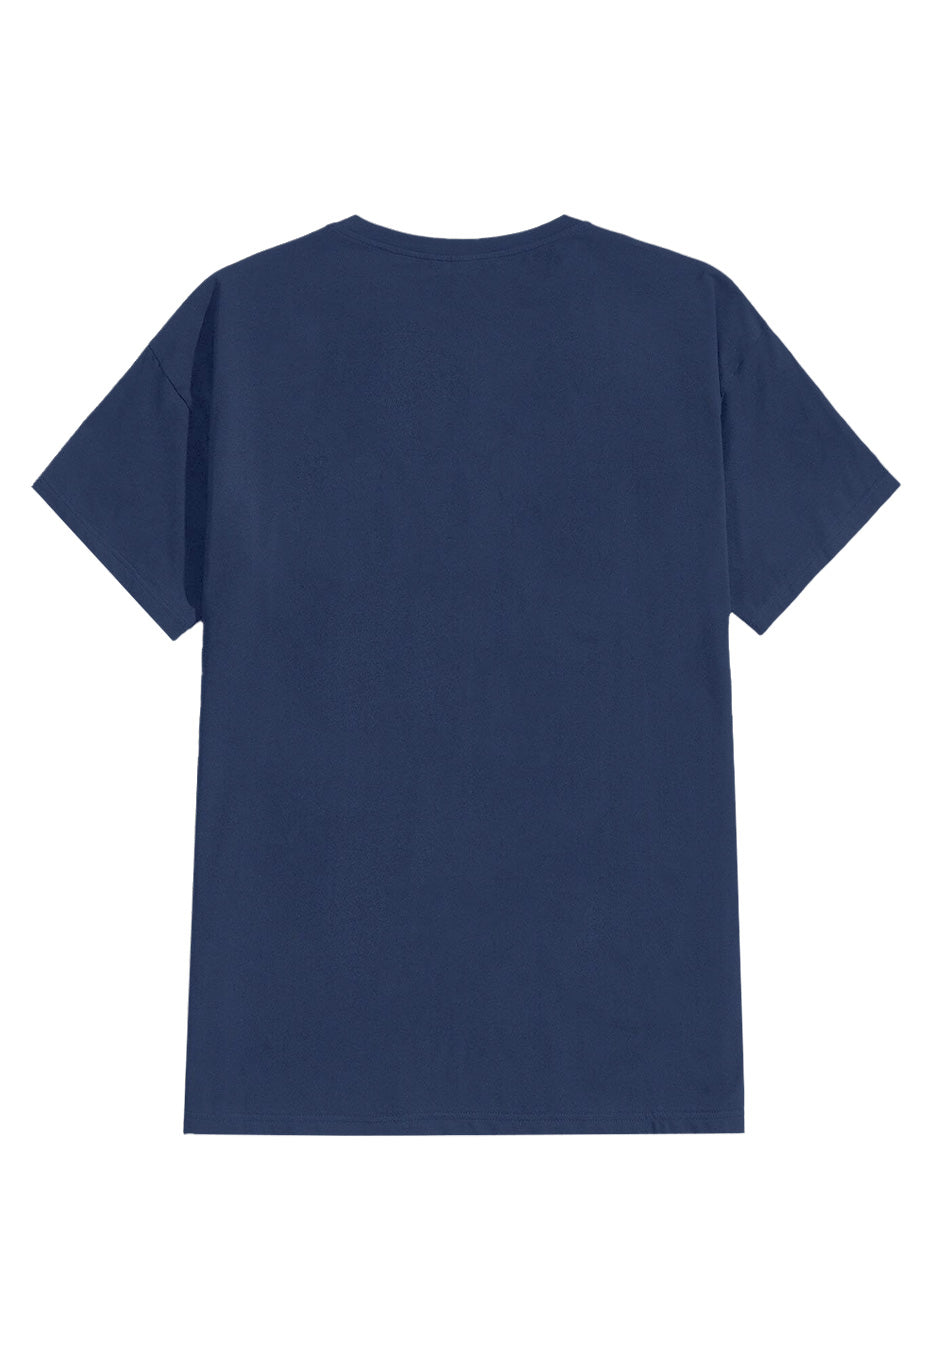 Broilers - Familienfreundlich Navy - T-Shirt